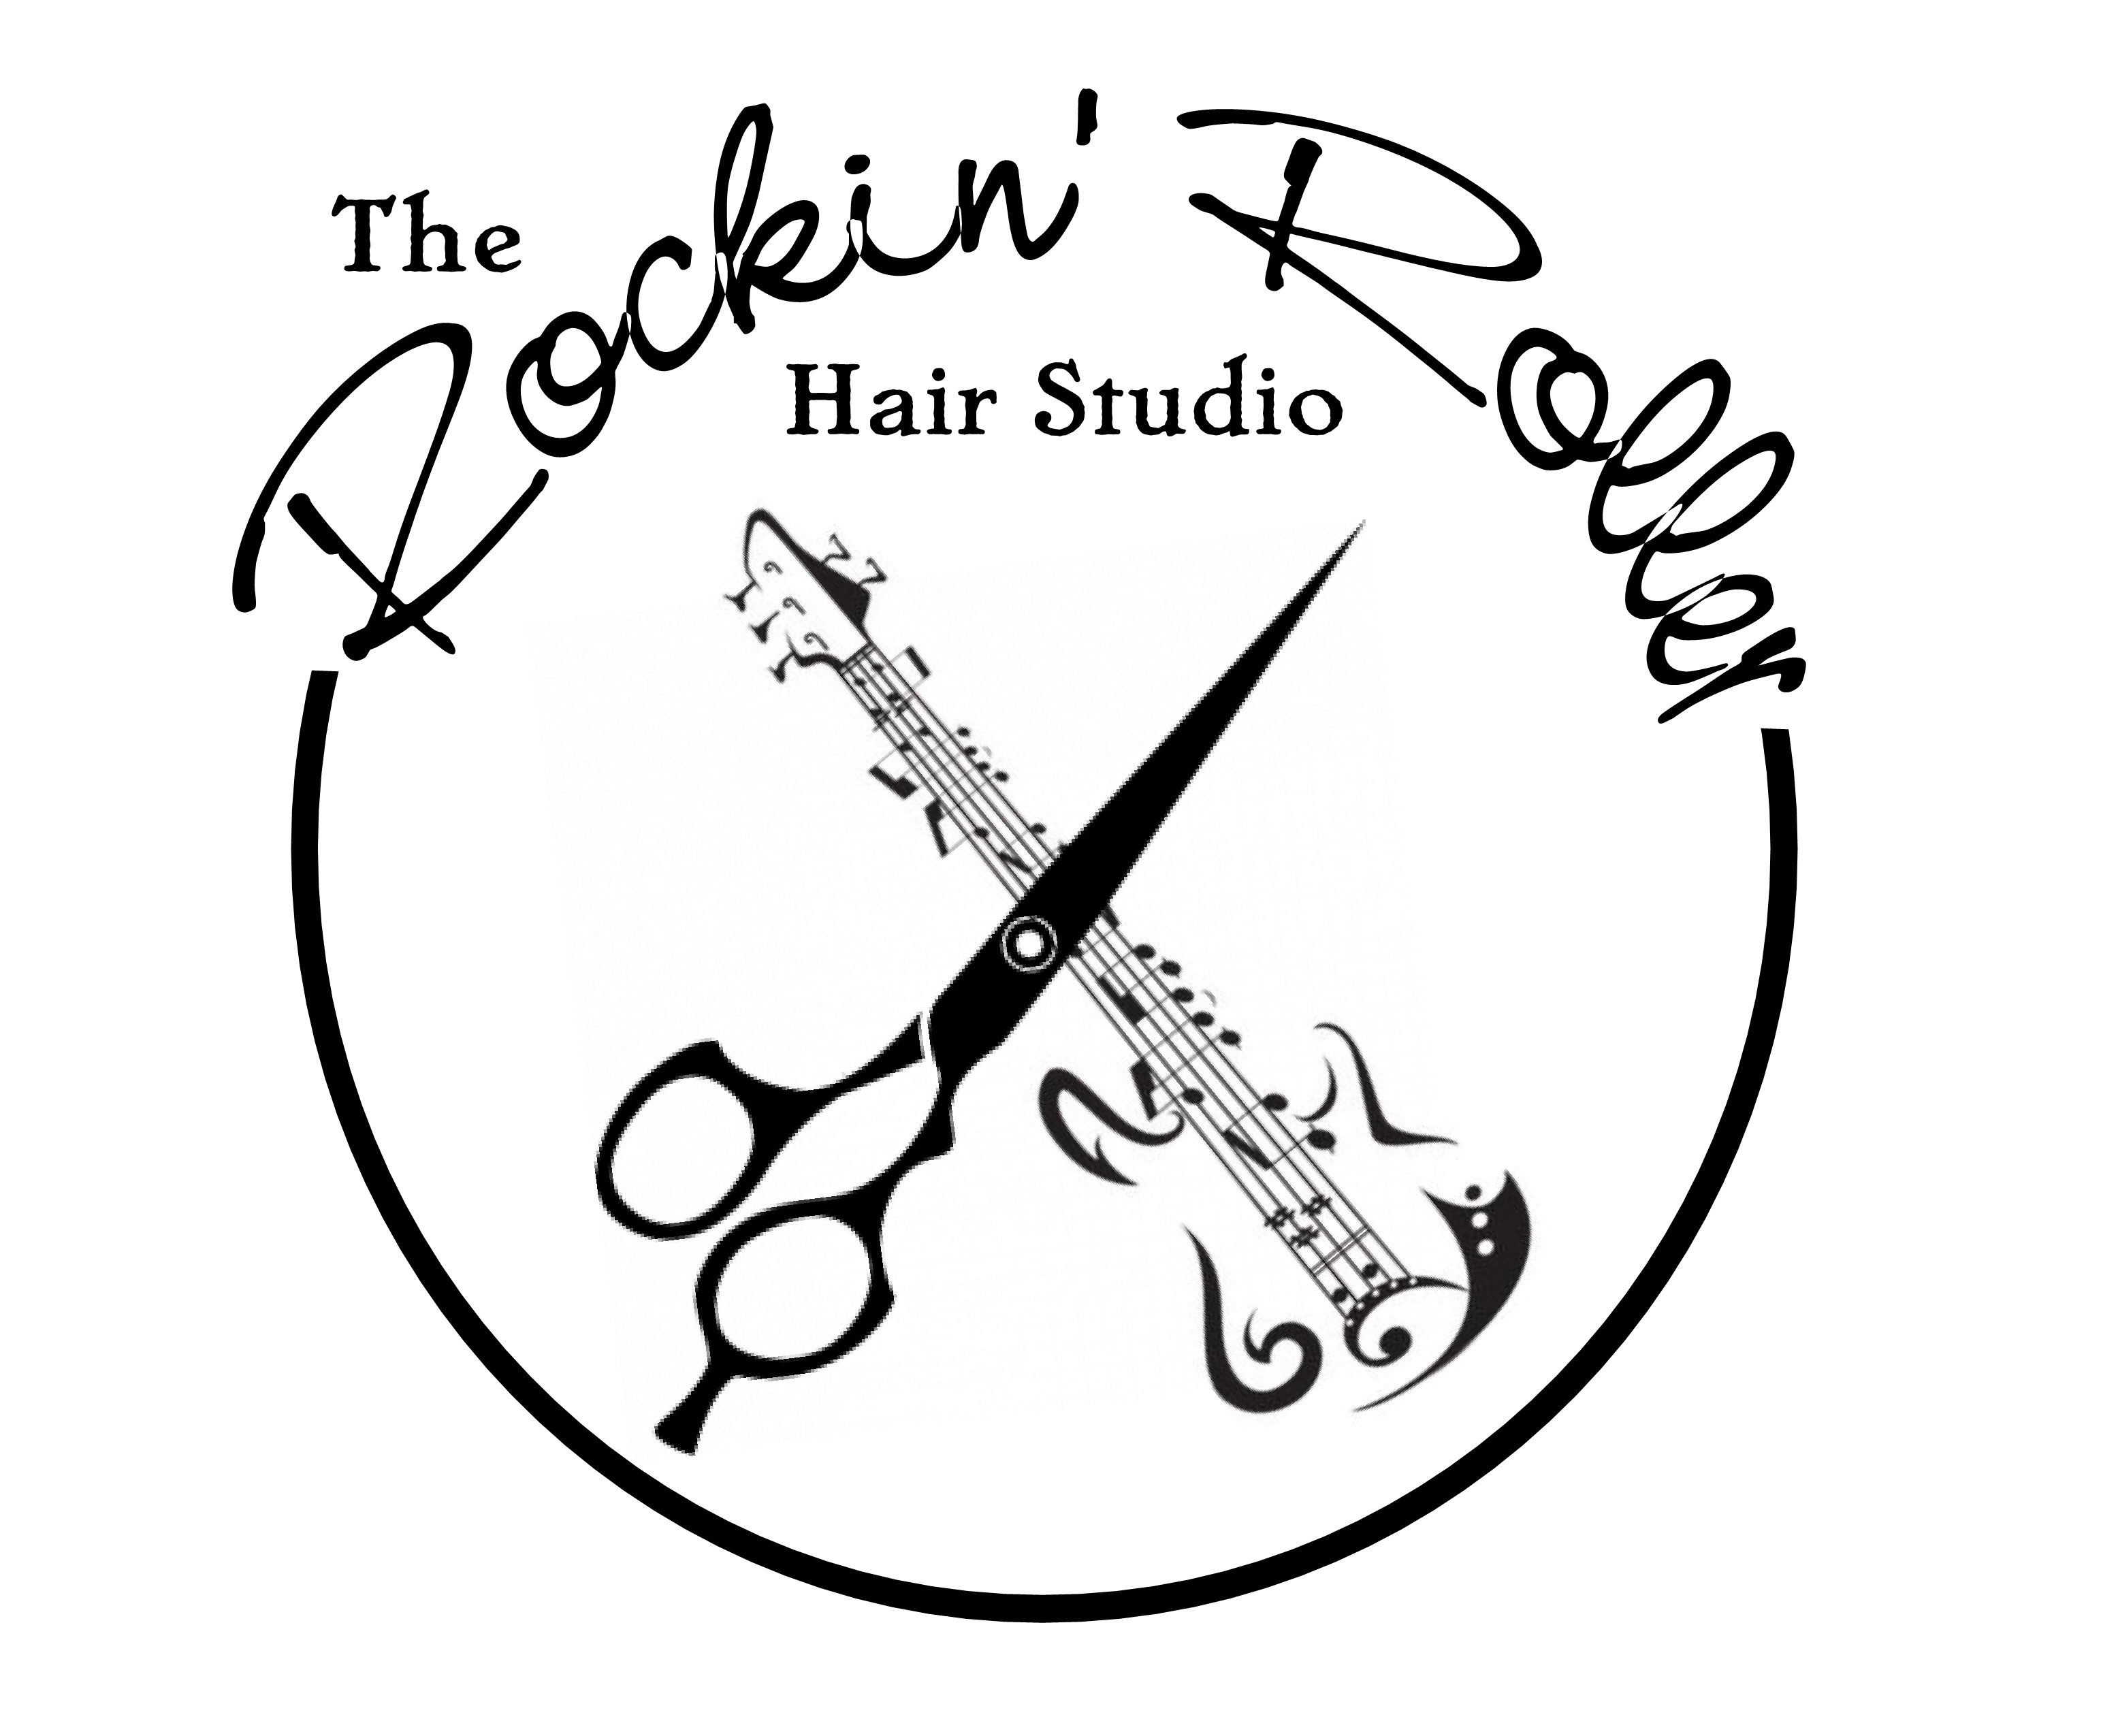 The Rockin’ Roller Hair Studio